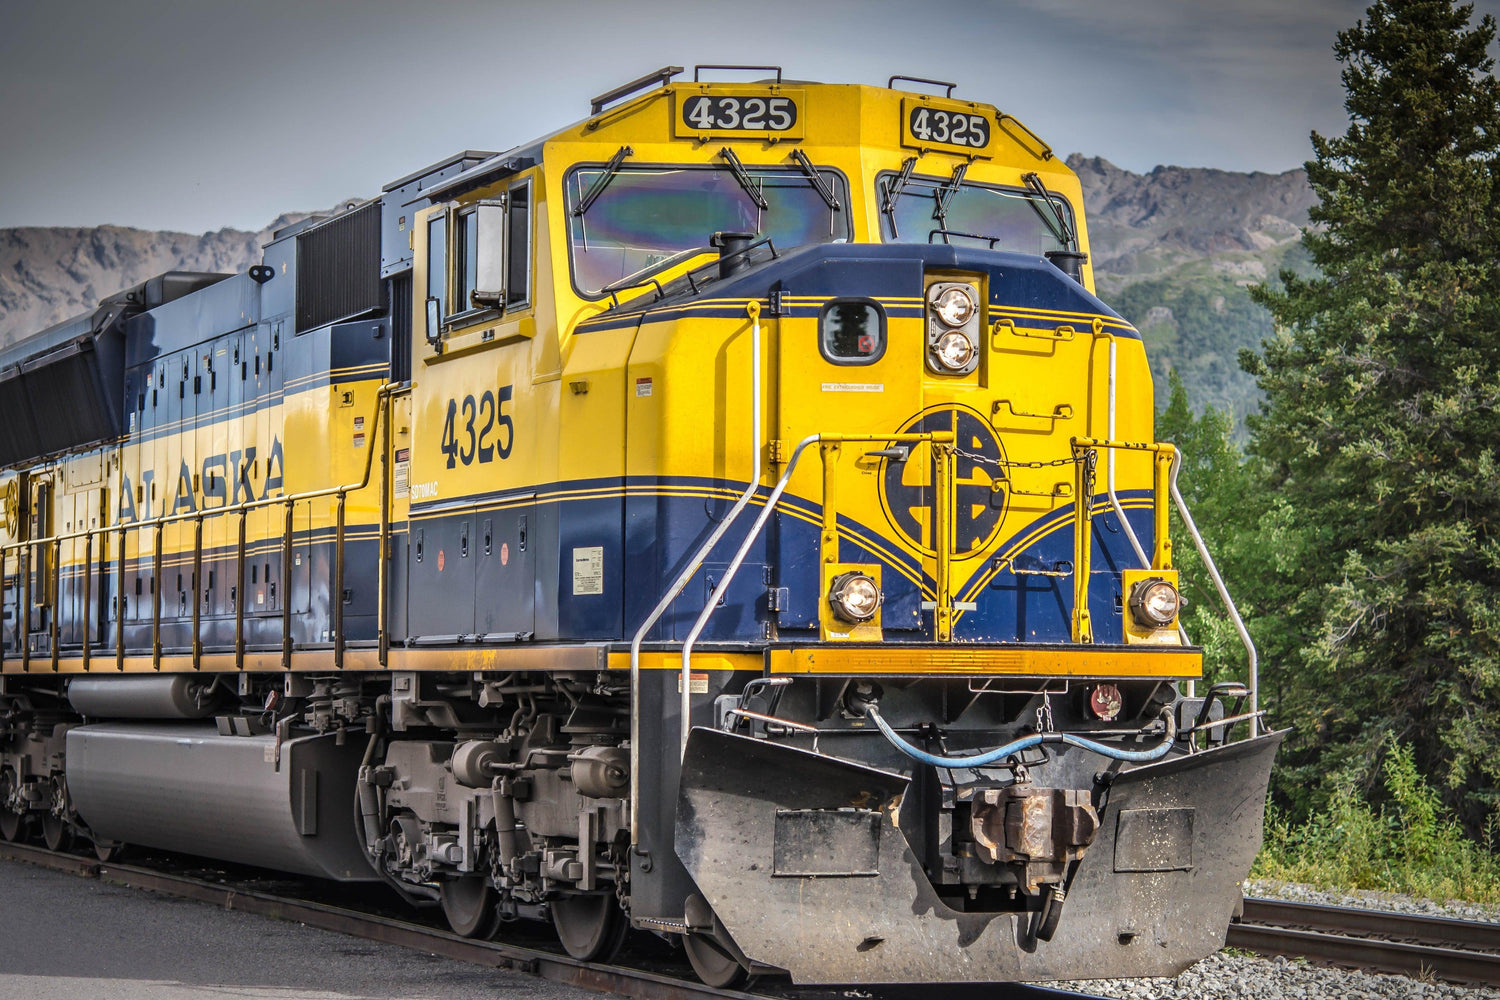 Fine photographic print of the Alaskan Gold Star Railroad train engine pulling into Denali National Park.